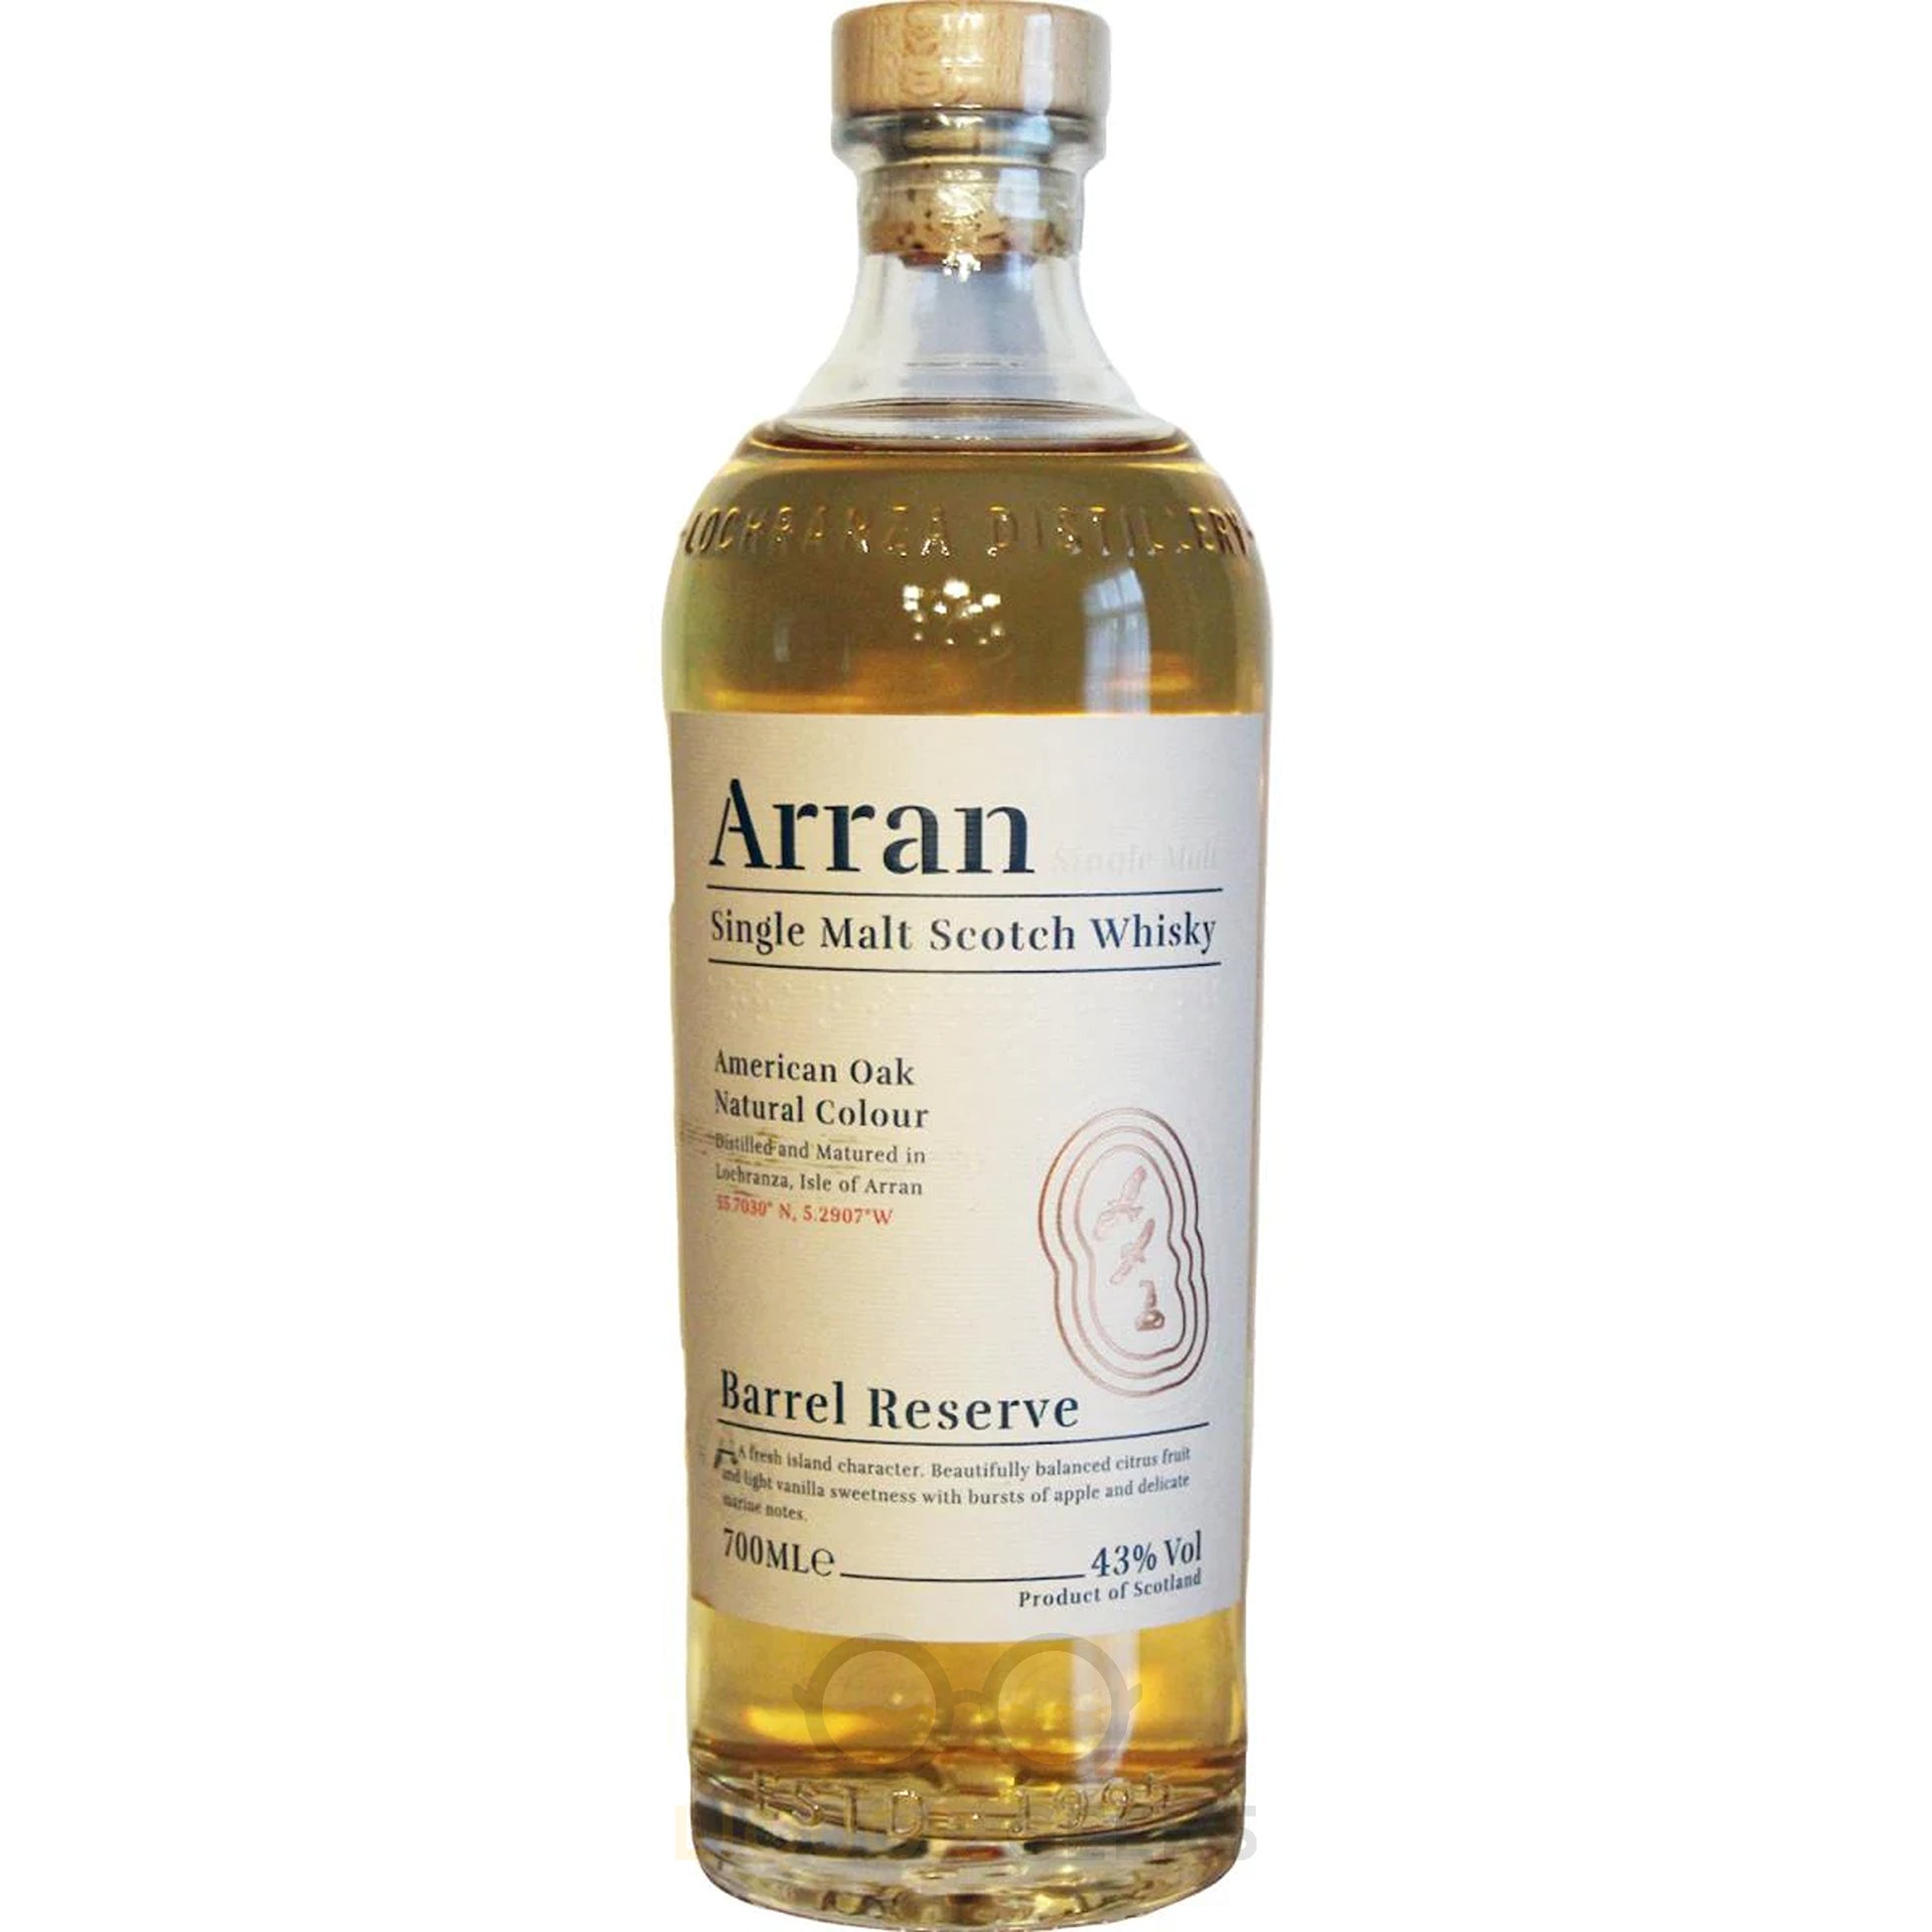 Arran Barrel Reserve Single Malt Scotch Whisky